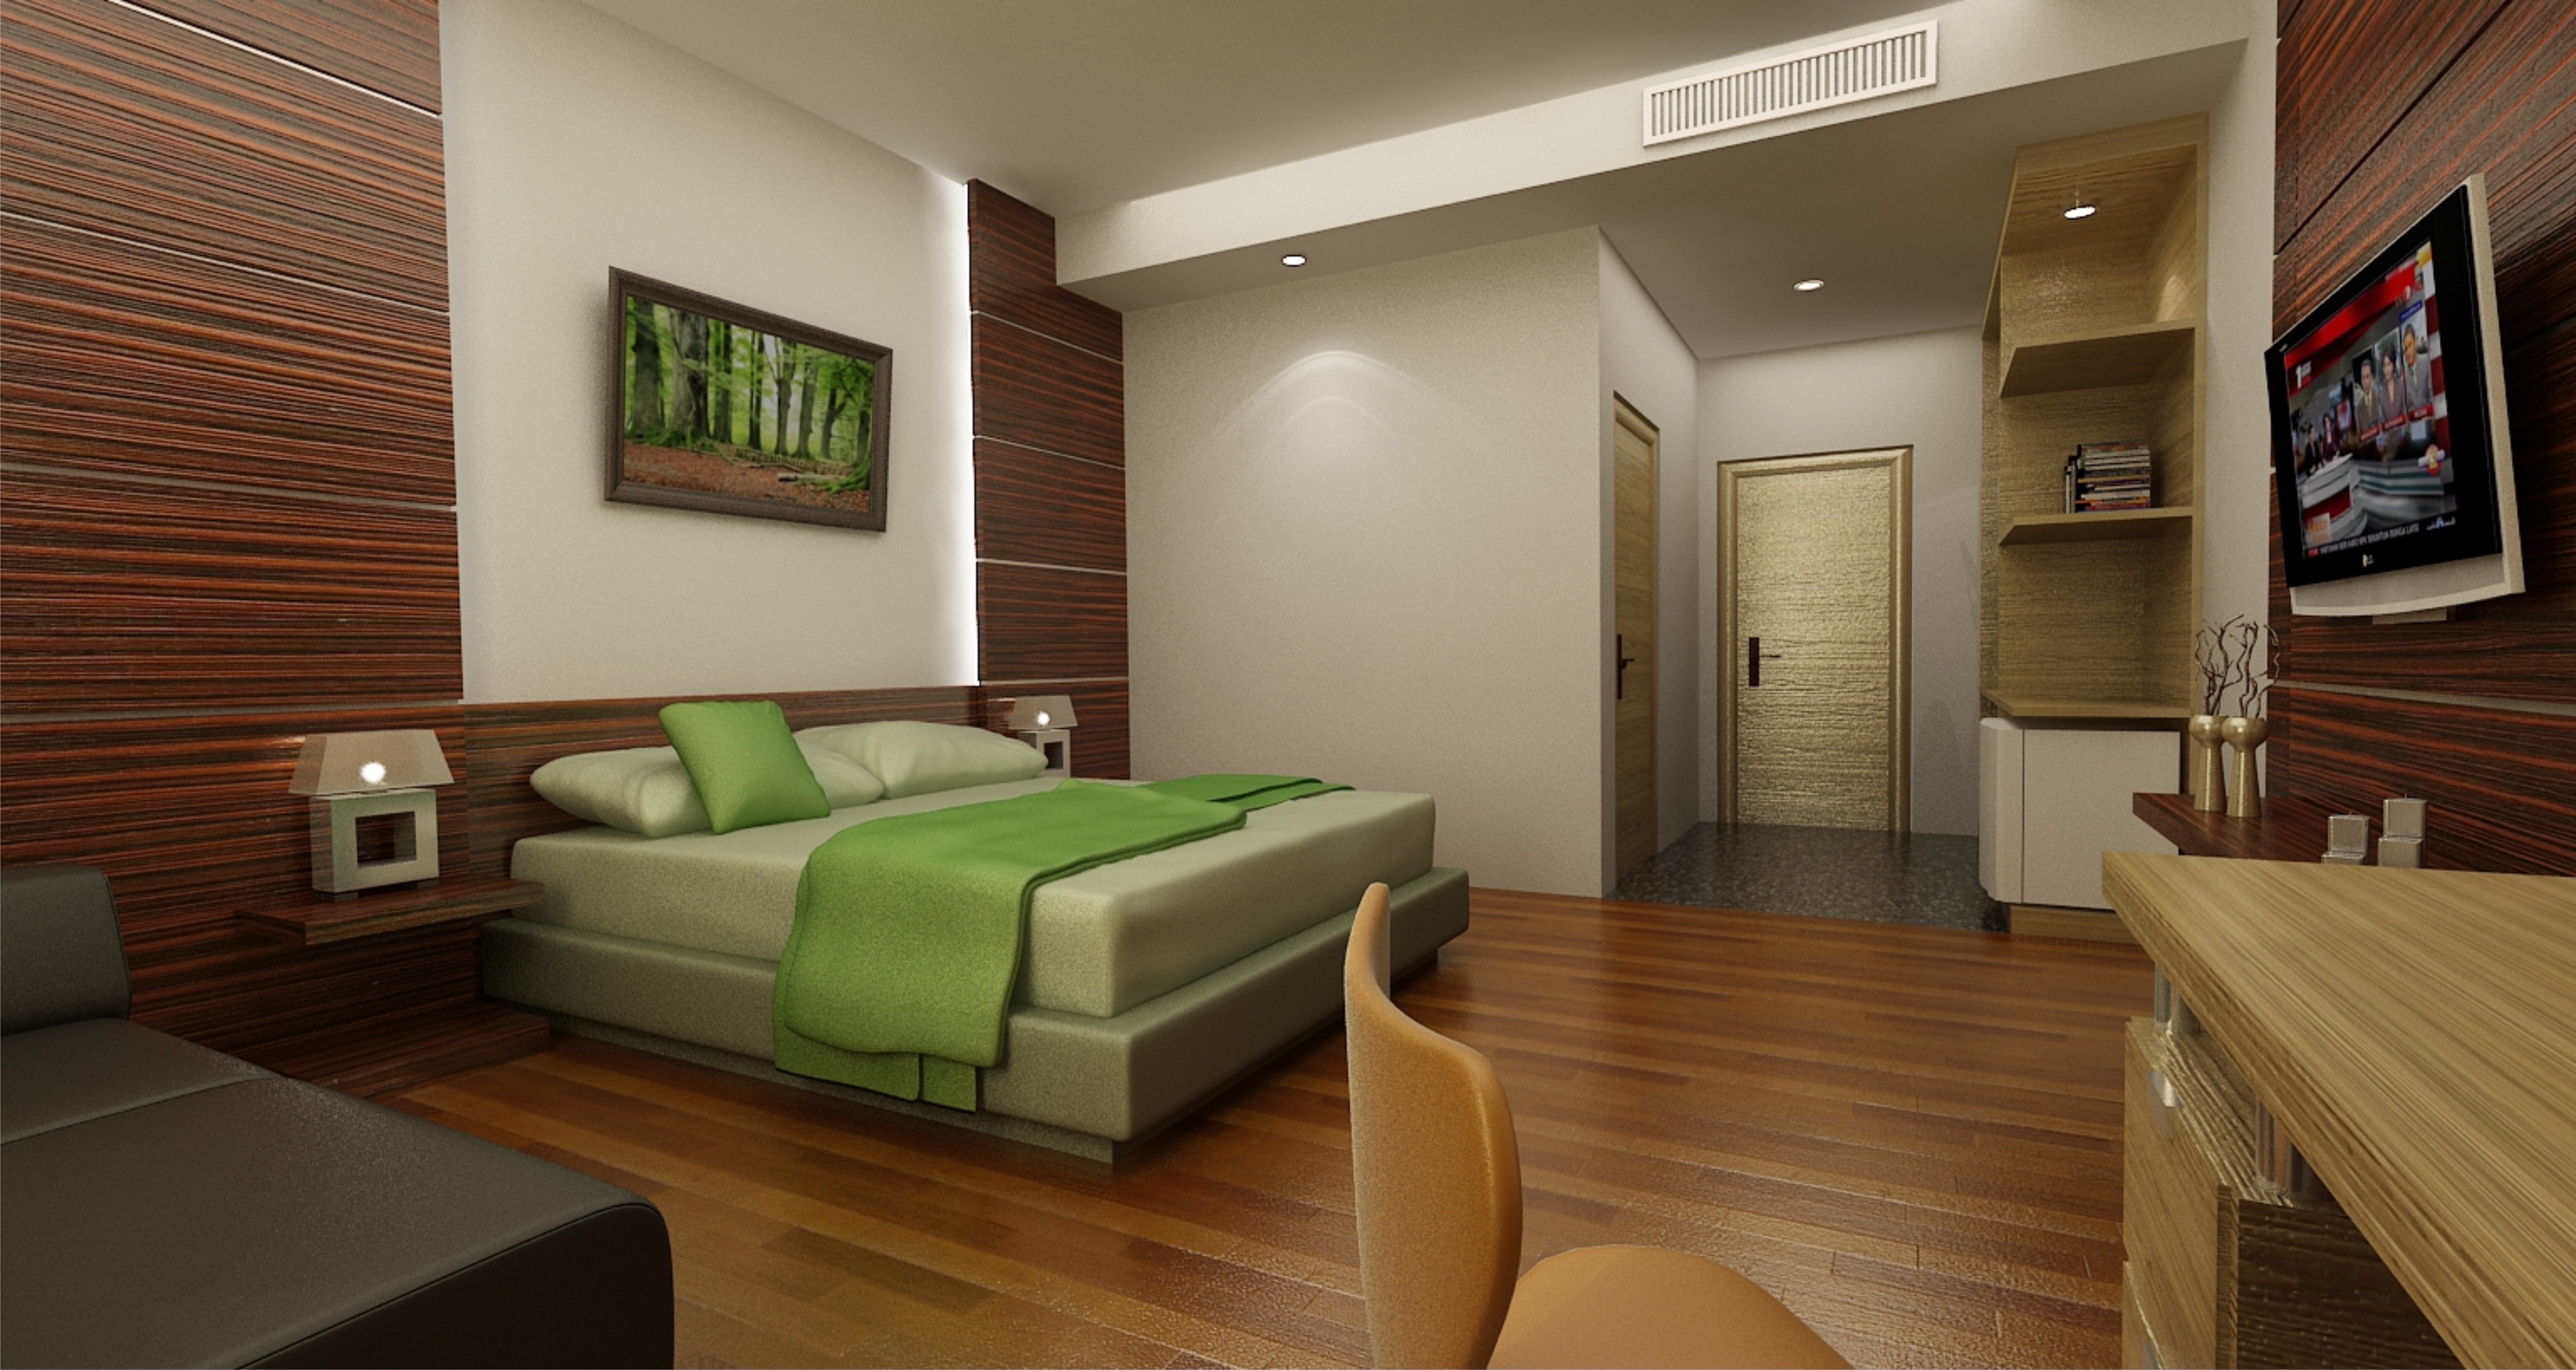 Mewah Desain Interior Rumah Yogyakarta 94 Untuk Rumah Merancang Inspirasi untuk Desain Interior Rumah Yogyakarta